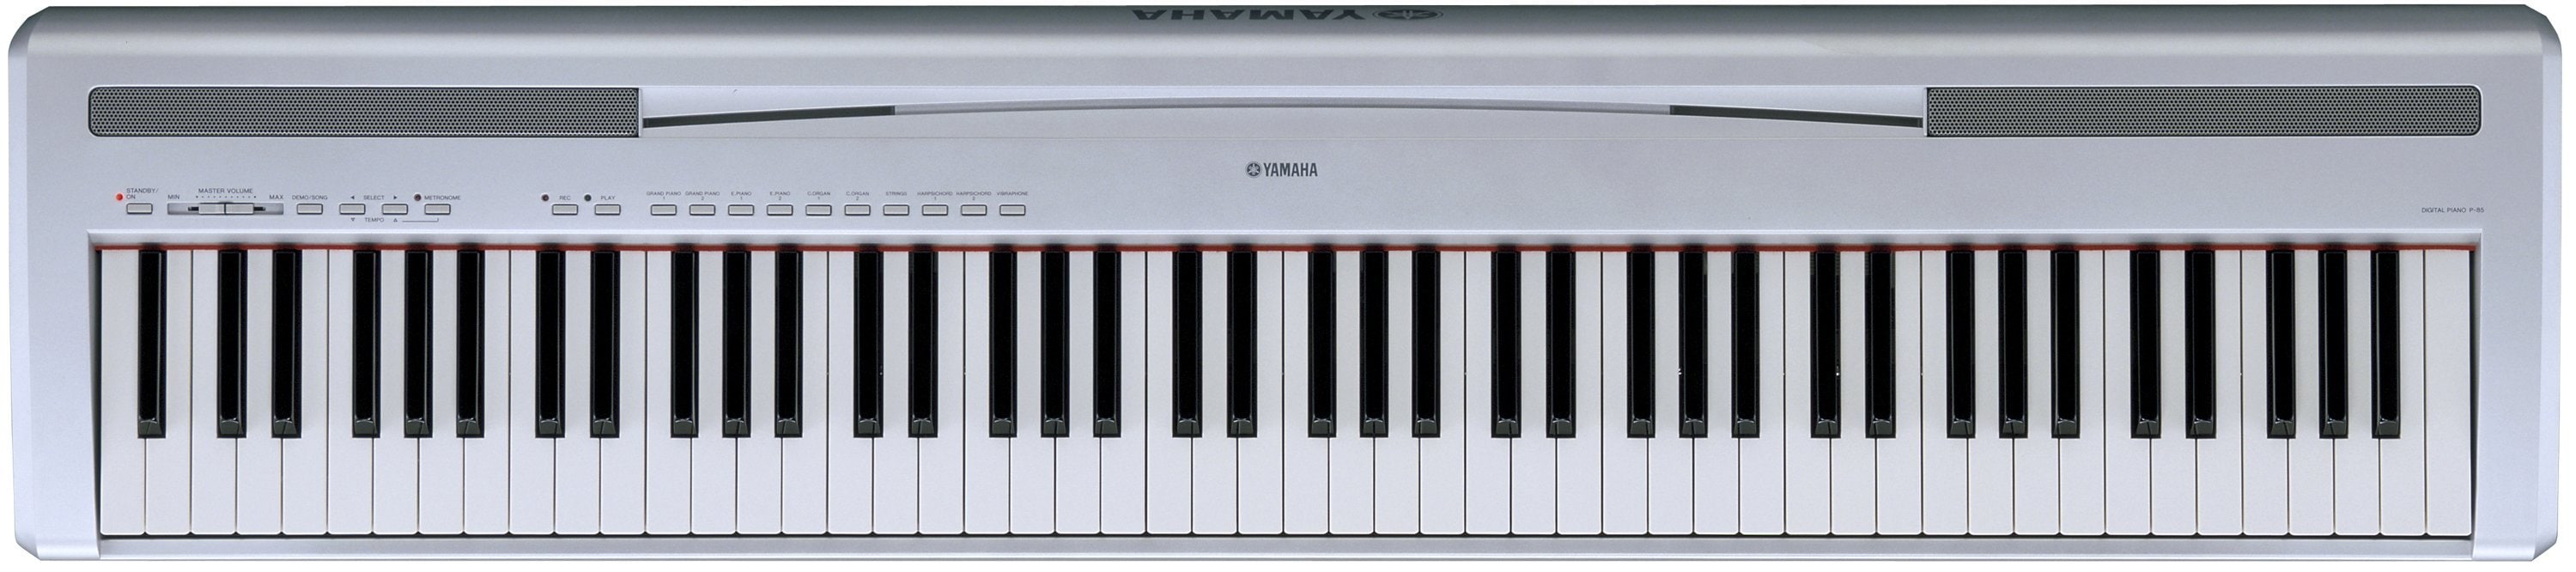 YAMAHA 電子ピアノ P-85  L-85 LP-5 スタンド ペダルセット 鍵盤楽器 最新デザインの